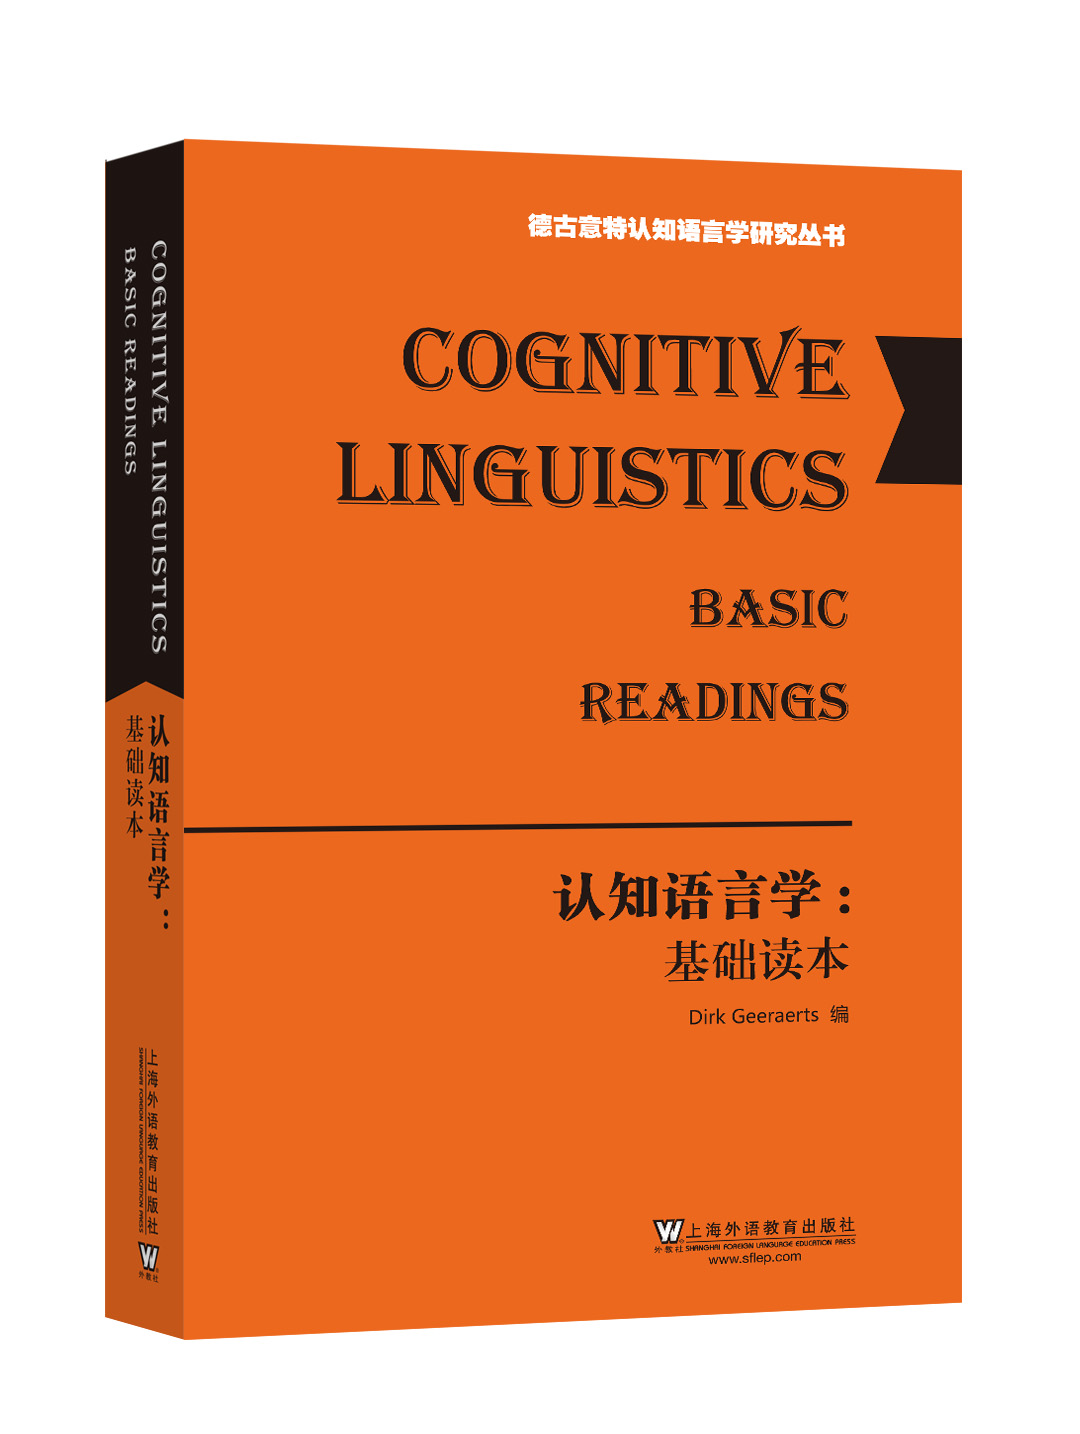 3D 07 德古意特认知语言学研究丛书：认知语言学：基础读本.jpg